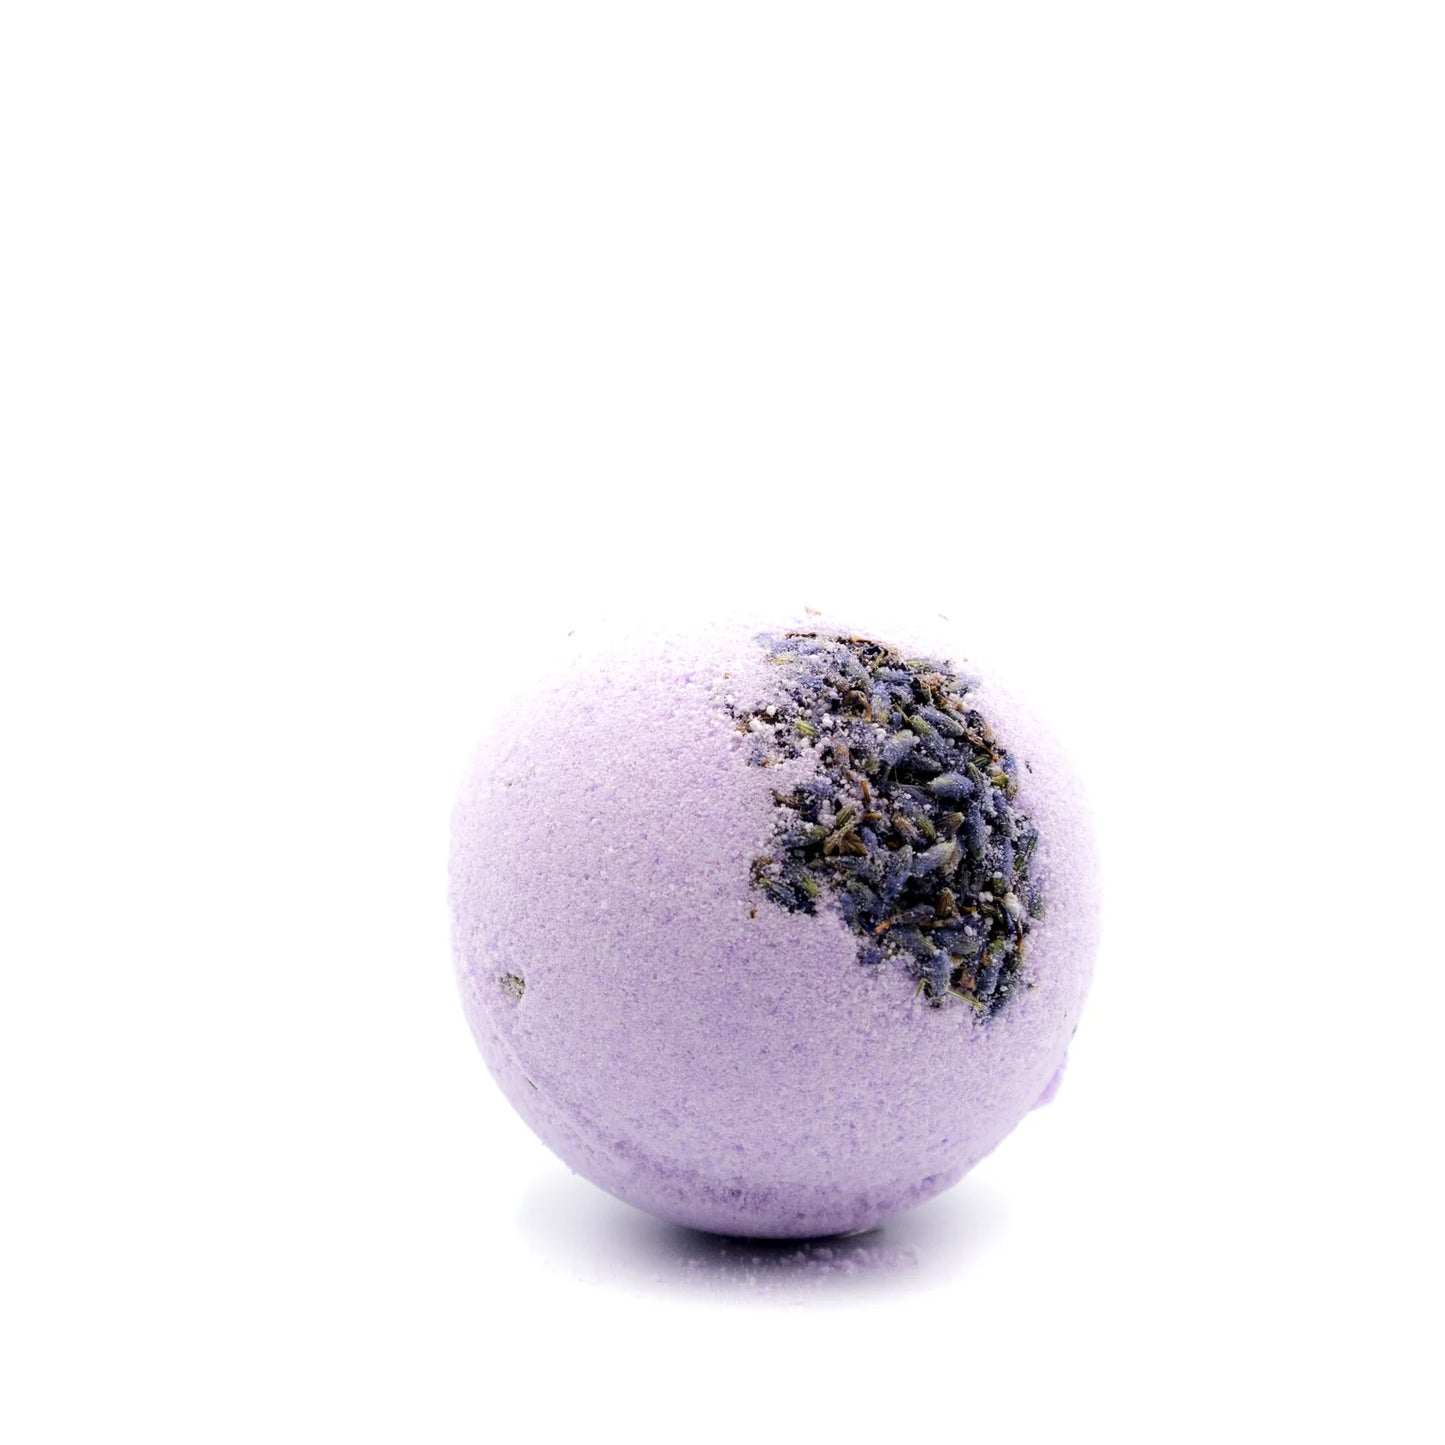 Bardot French Lavender Bath Bomb